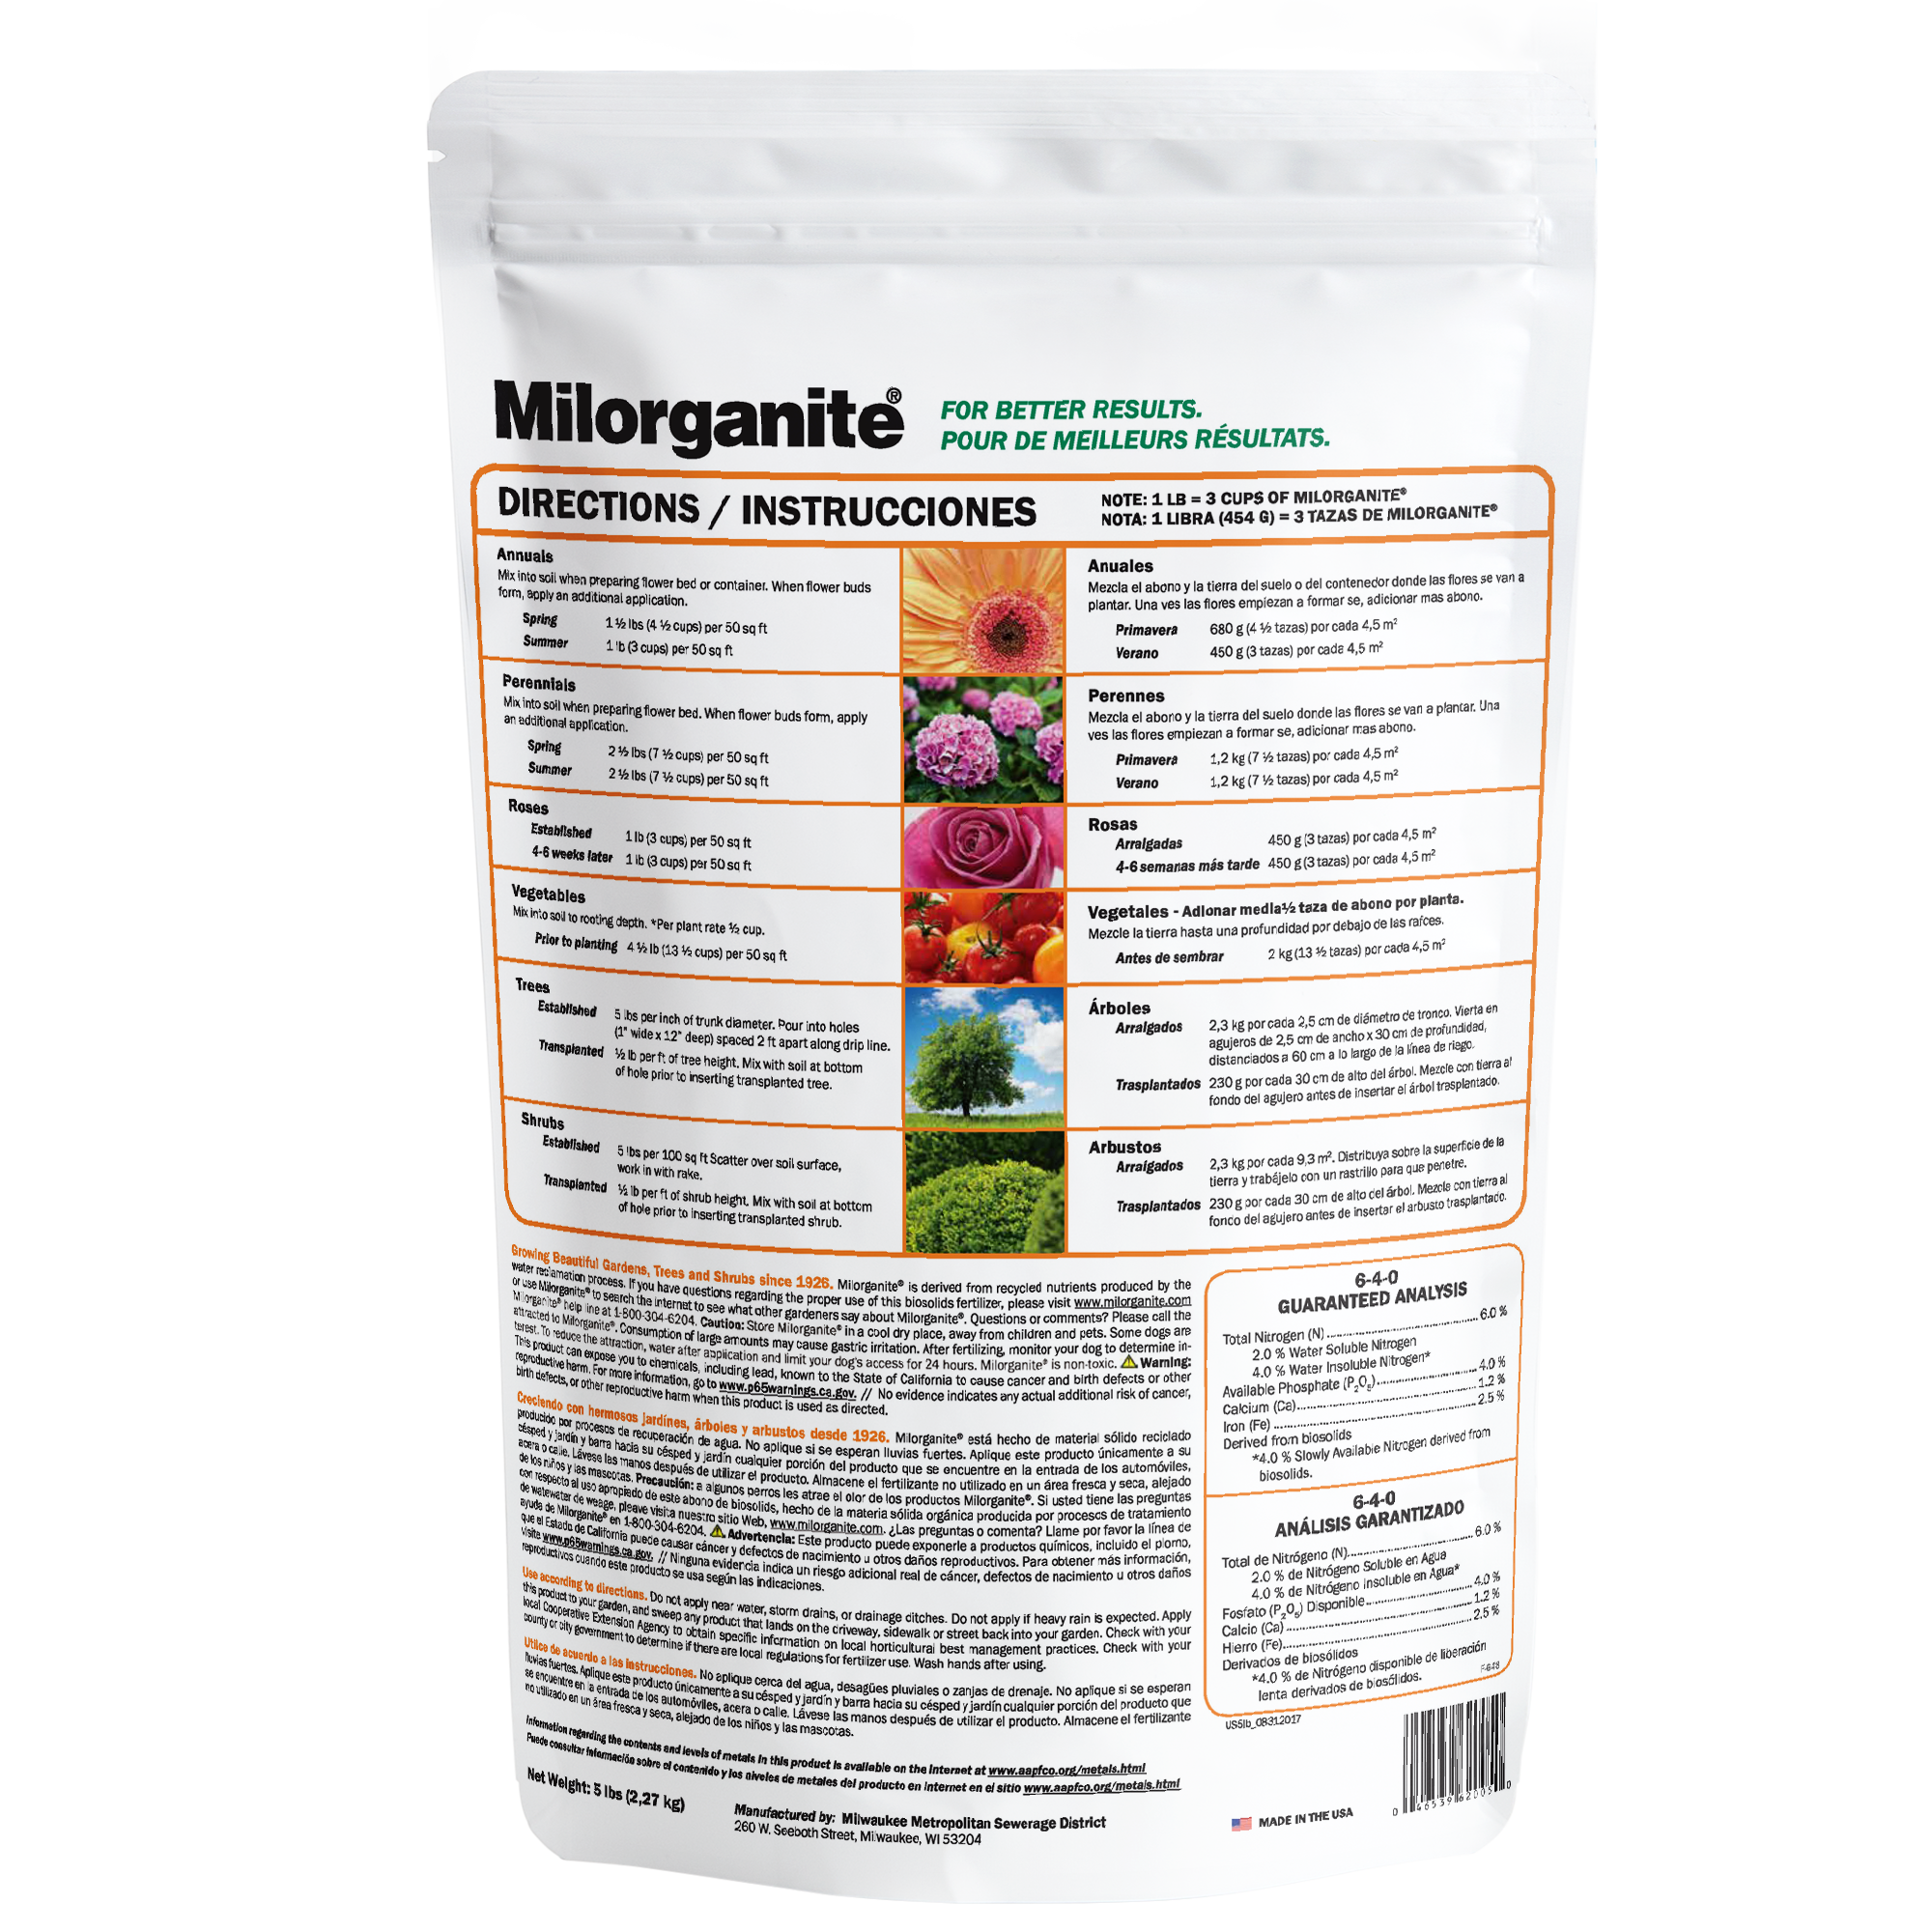 Milorganite All-Purpose Eco-Friendly Slow-Release Nitrogen Fertilizer 6-4-0, 5lb